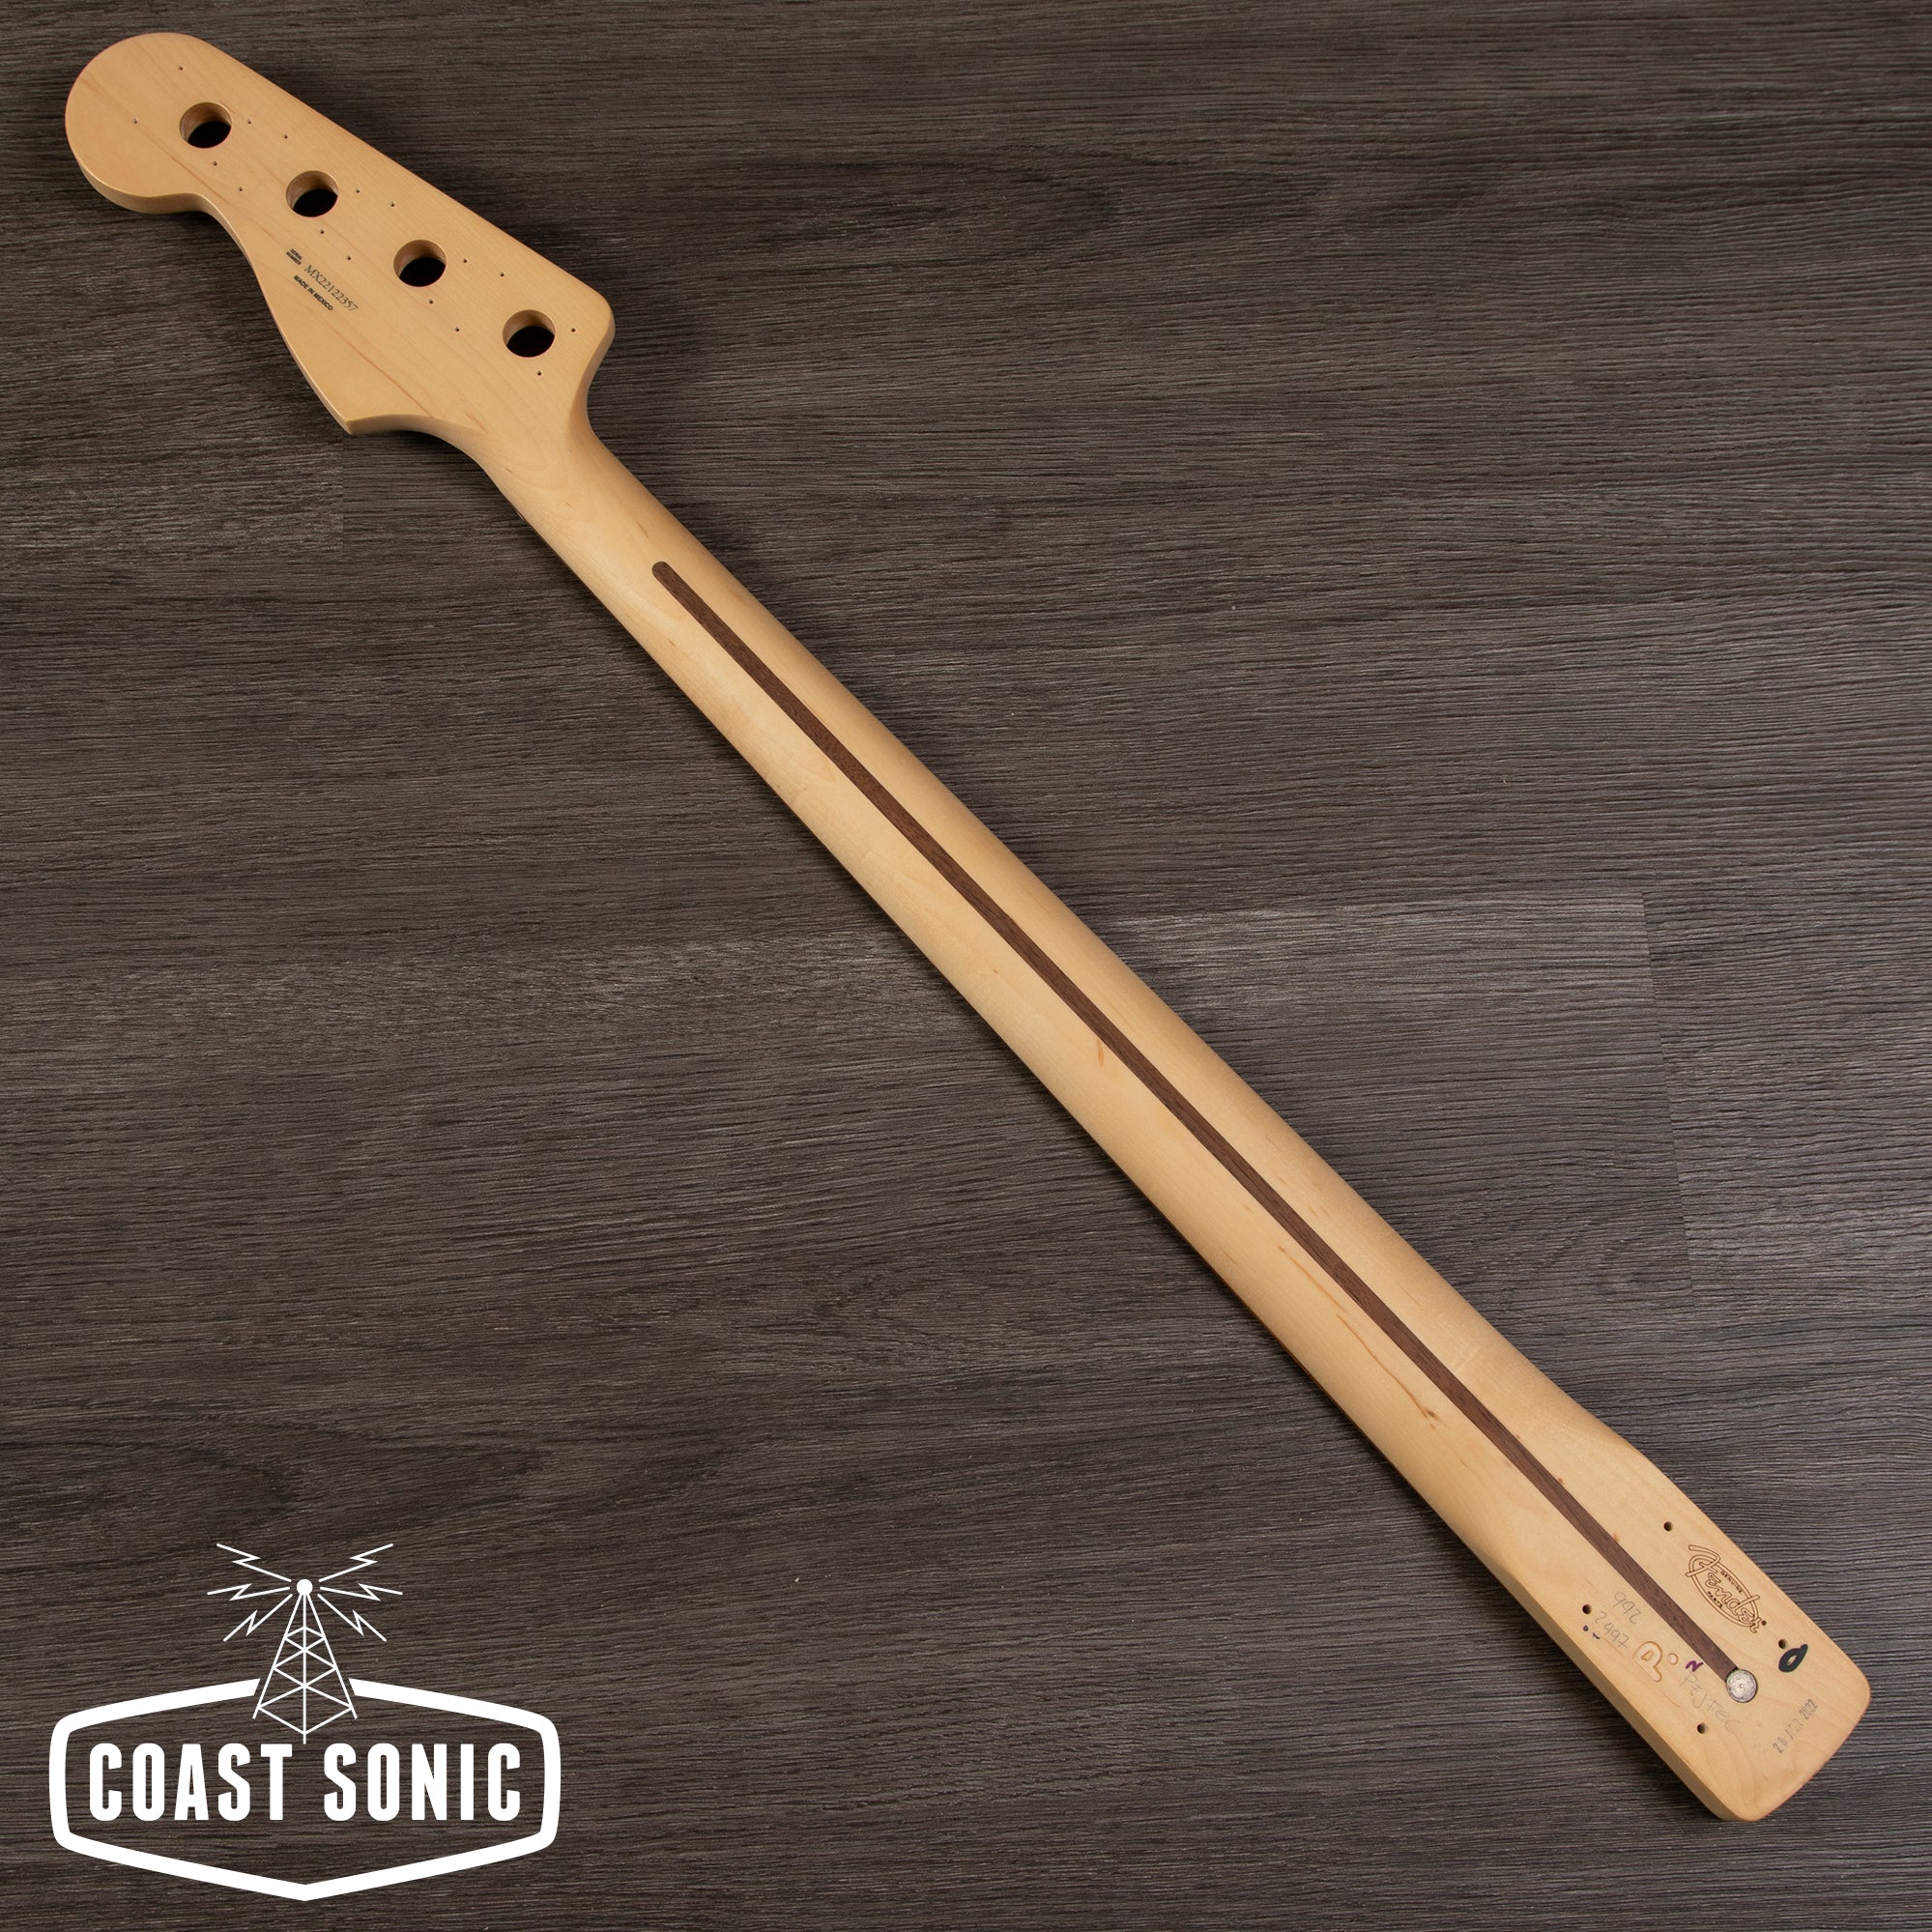 Fender Player Series Precision Bass Neck Maple